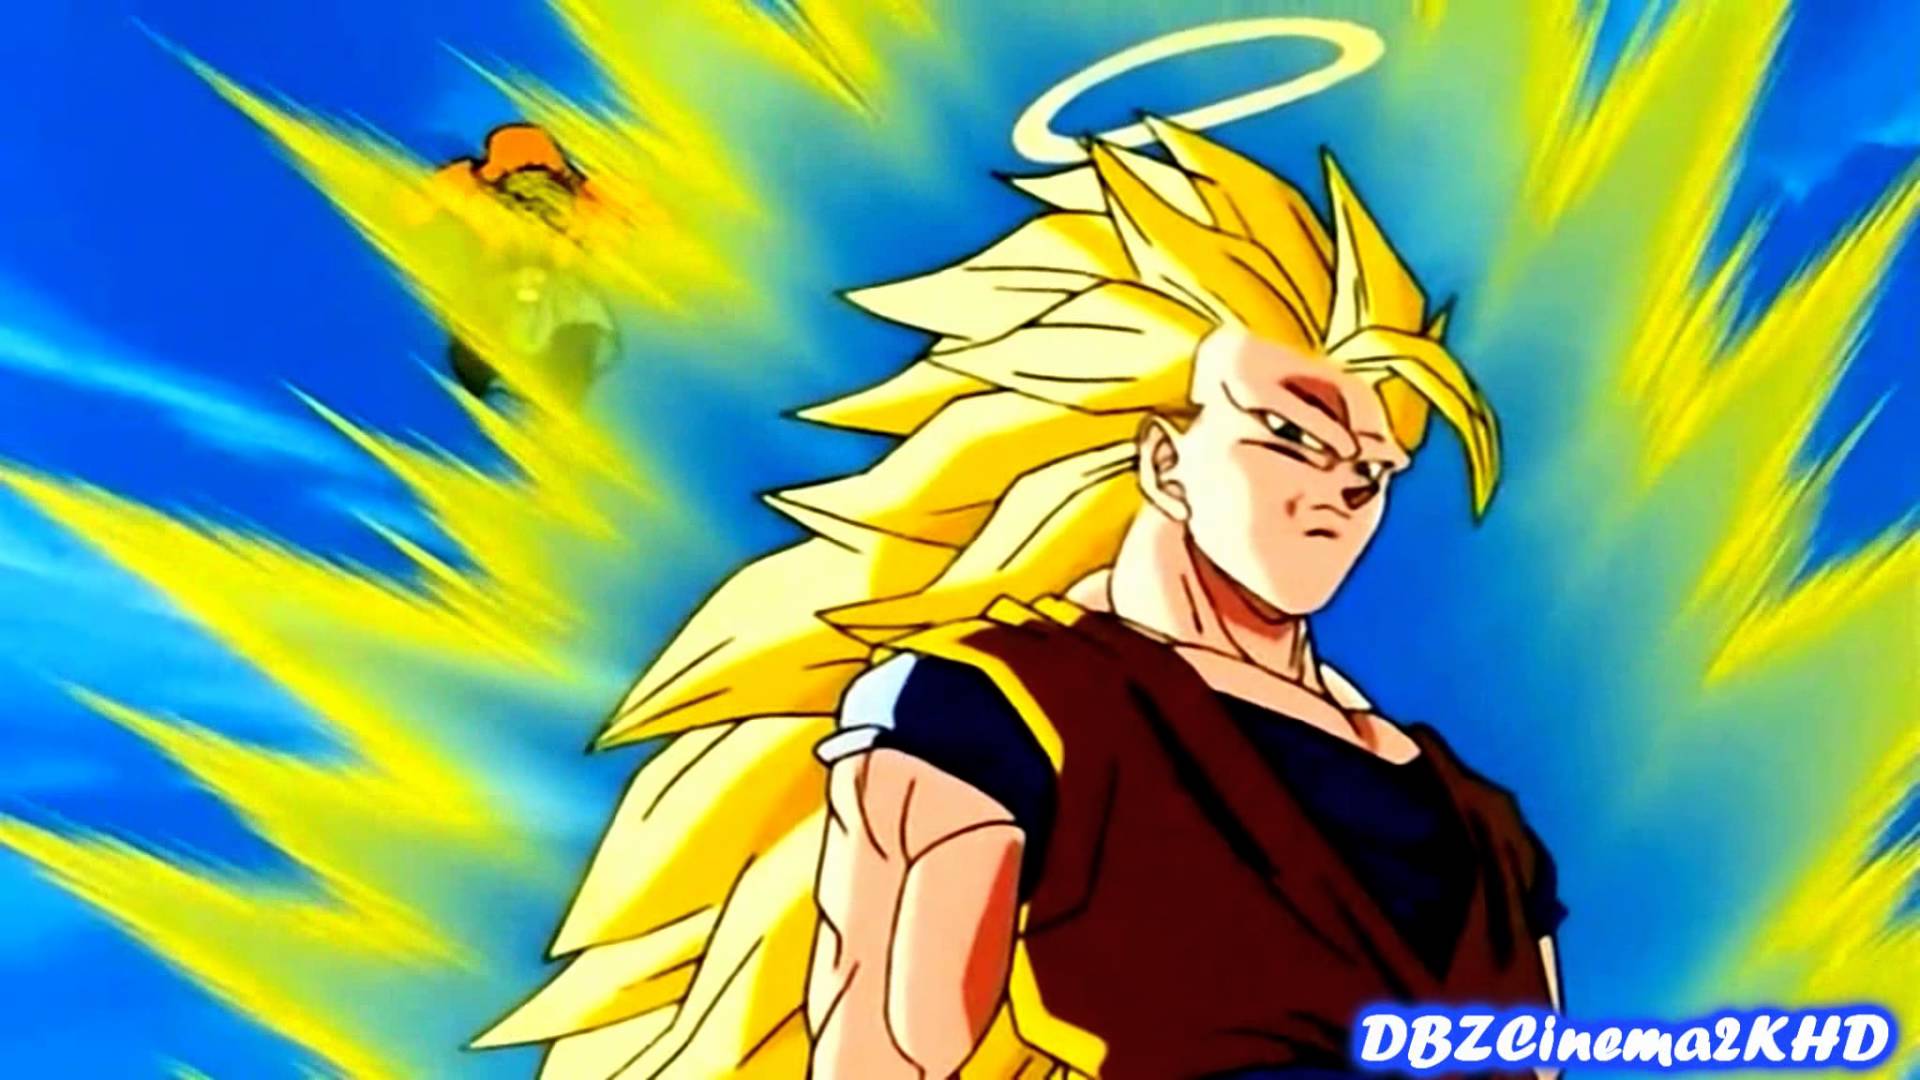 Dragon Ball Z image *Goku* HD wallpapers and backgrounds photos